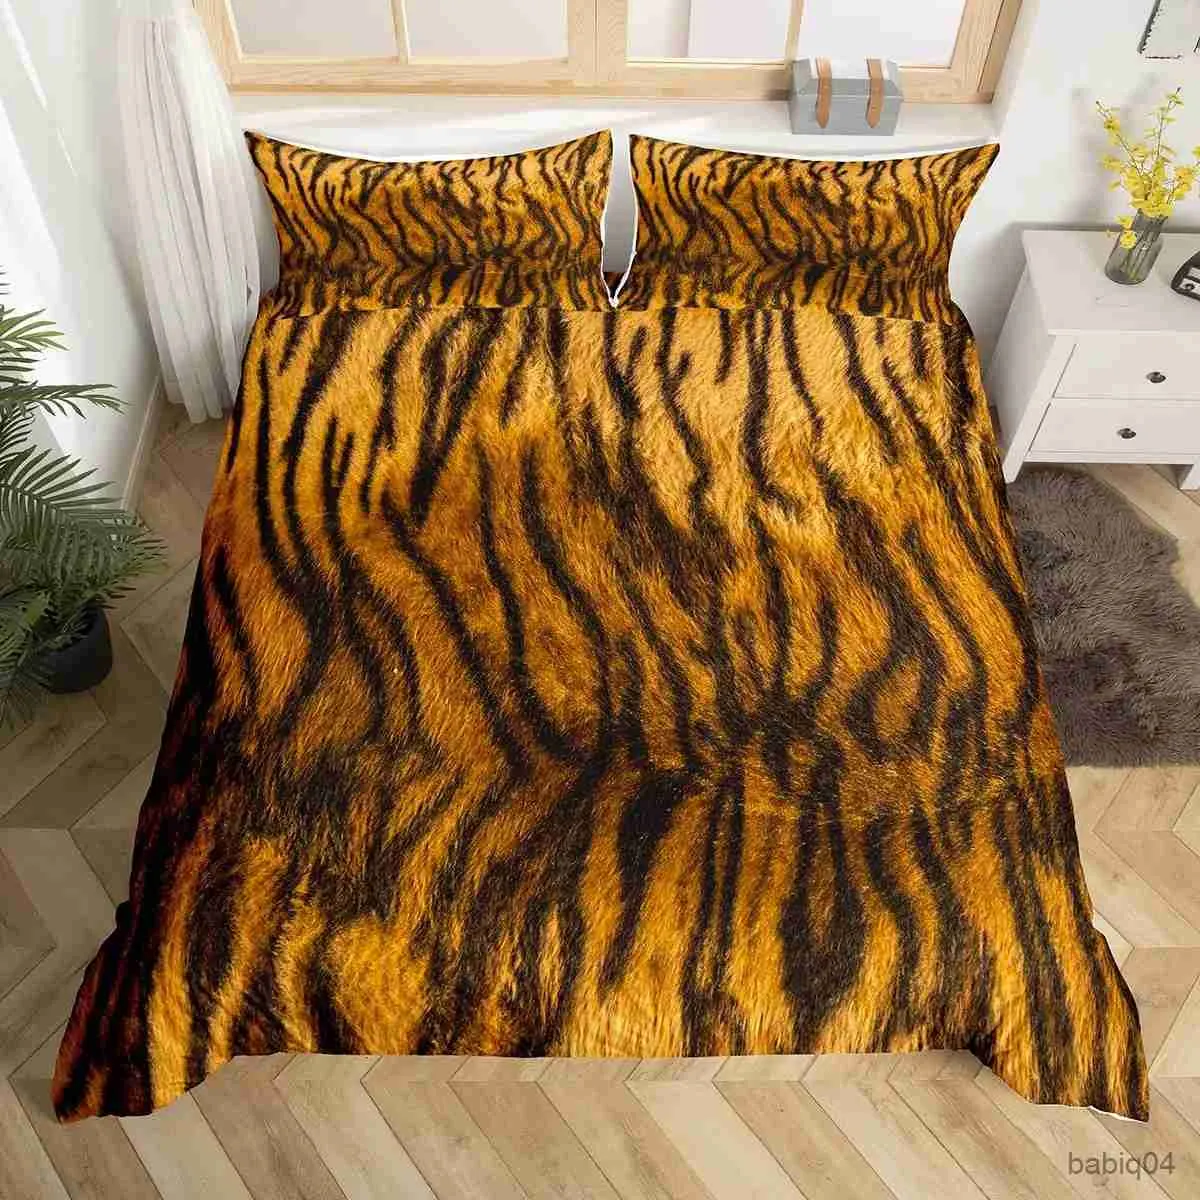 Bedding sets Tiger Skin King Queen Duvet Cover Tiger Stripes Themed Bedding Set Animal Fur Comforter Cover Wildlife Polyester Quilt Cover